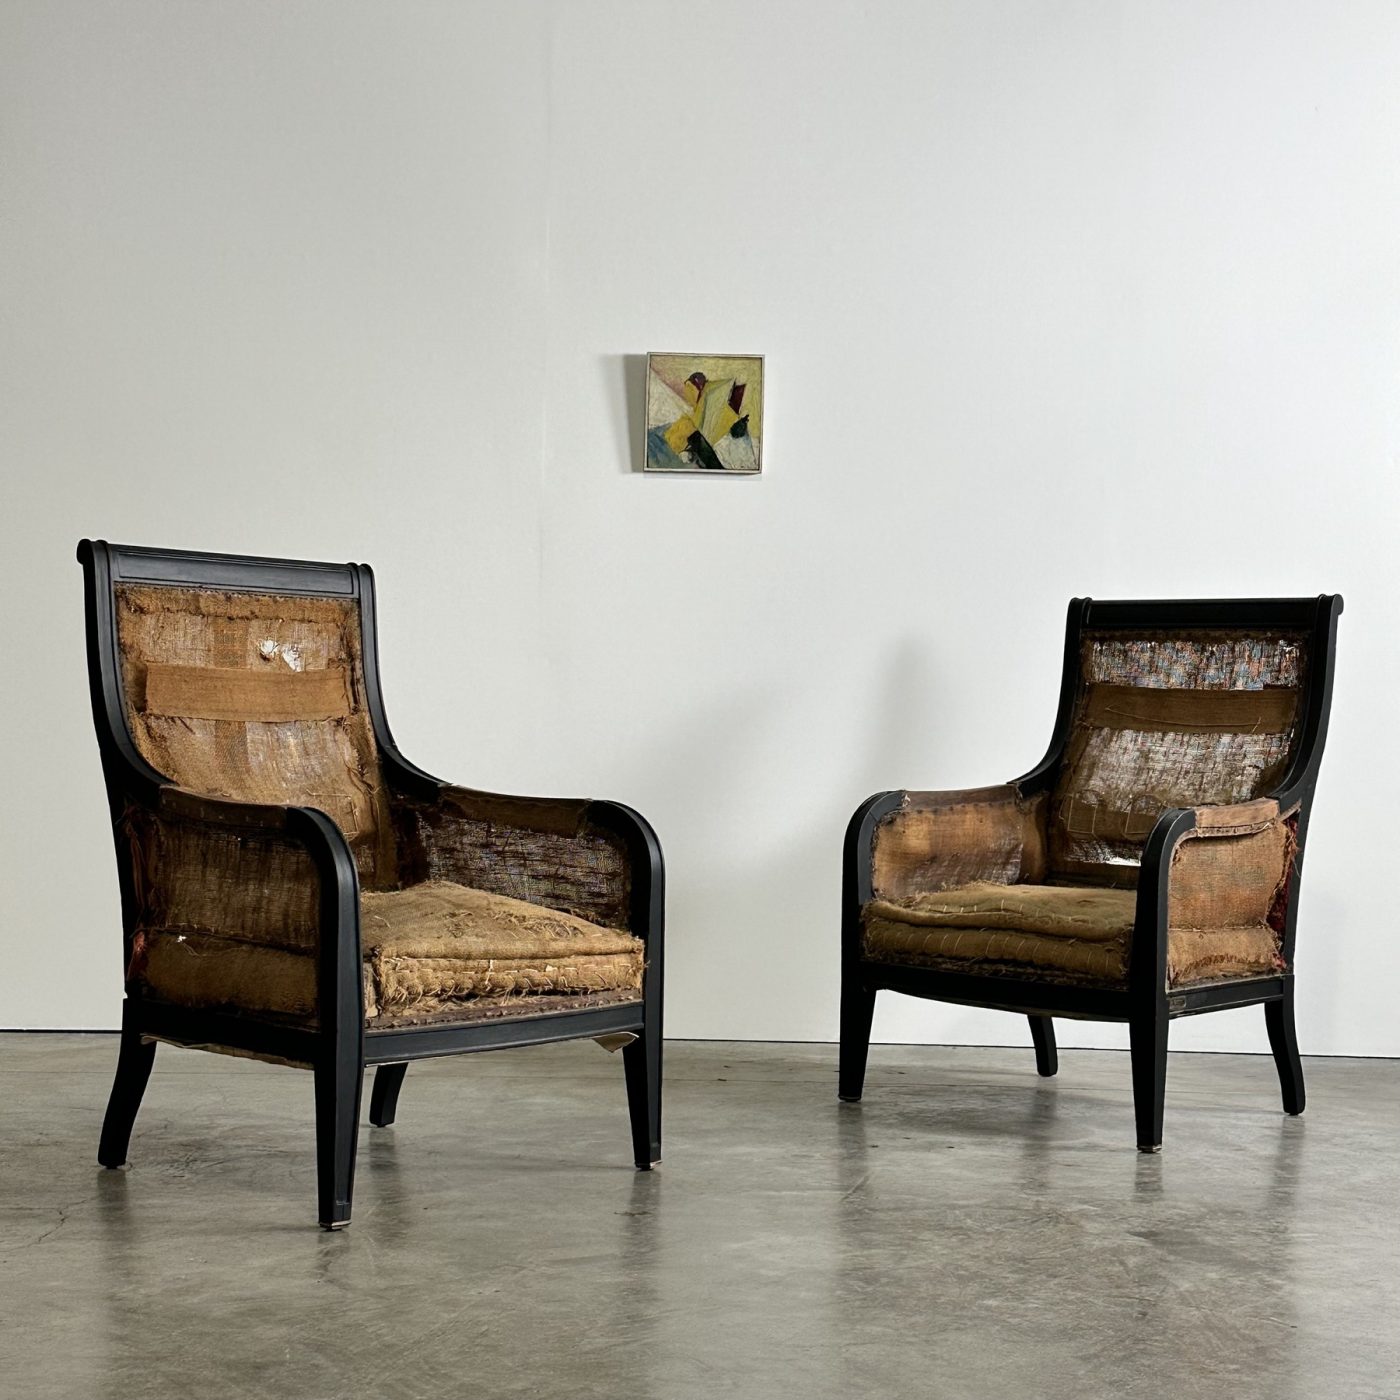 objet-vagabond-french-armchairs0002